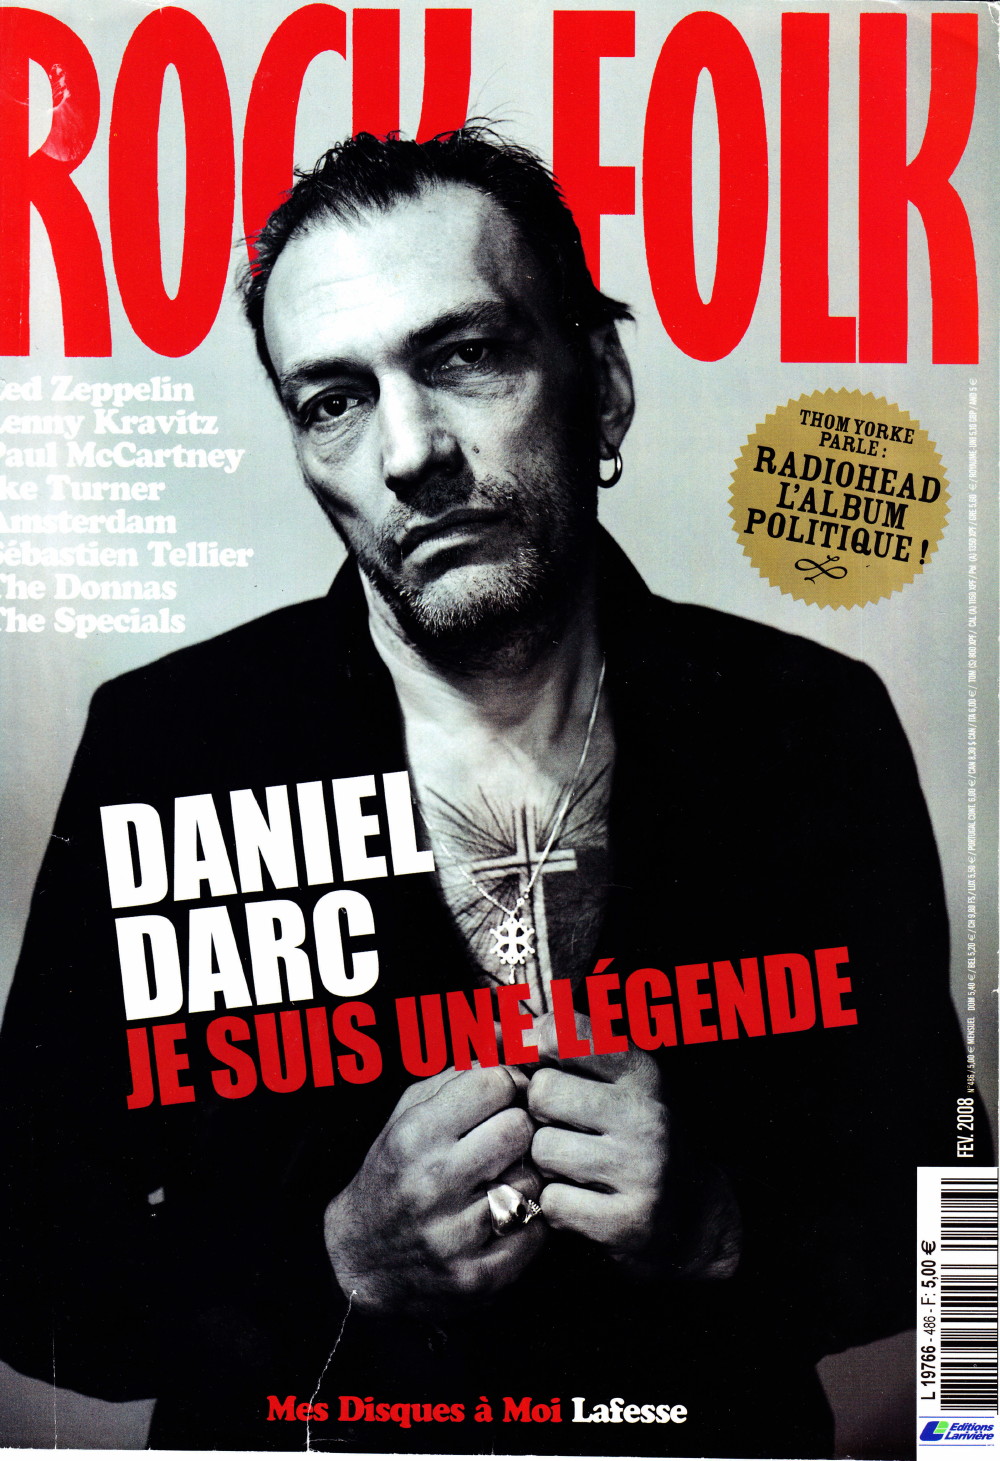 DANIEL DARC par NICOLAS UNGEMUTH ("Rock And Folk", février 2008) 13090803422415789311533513